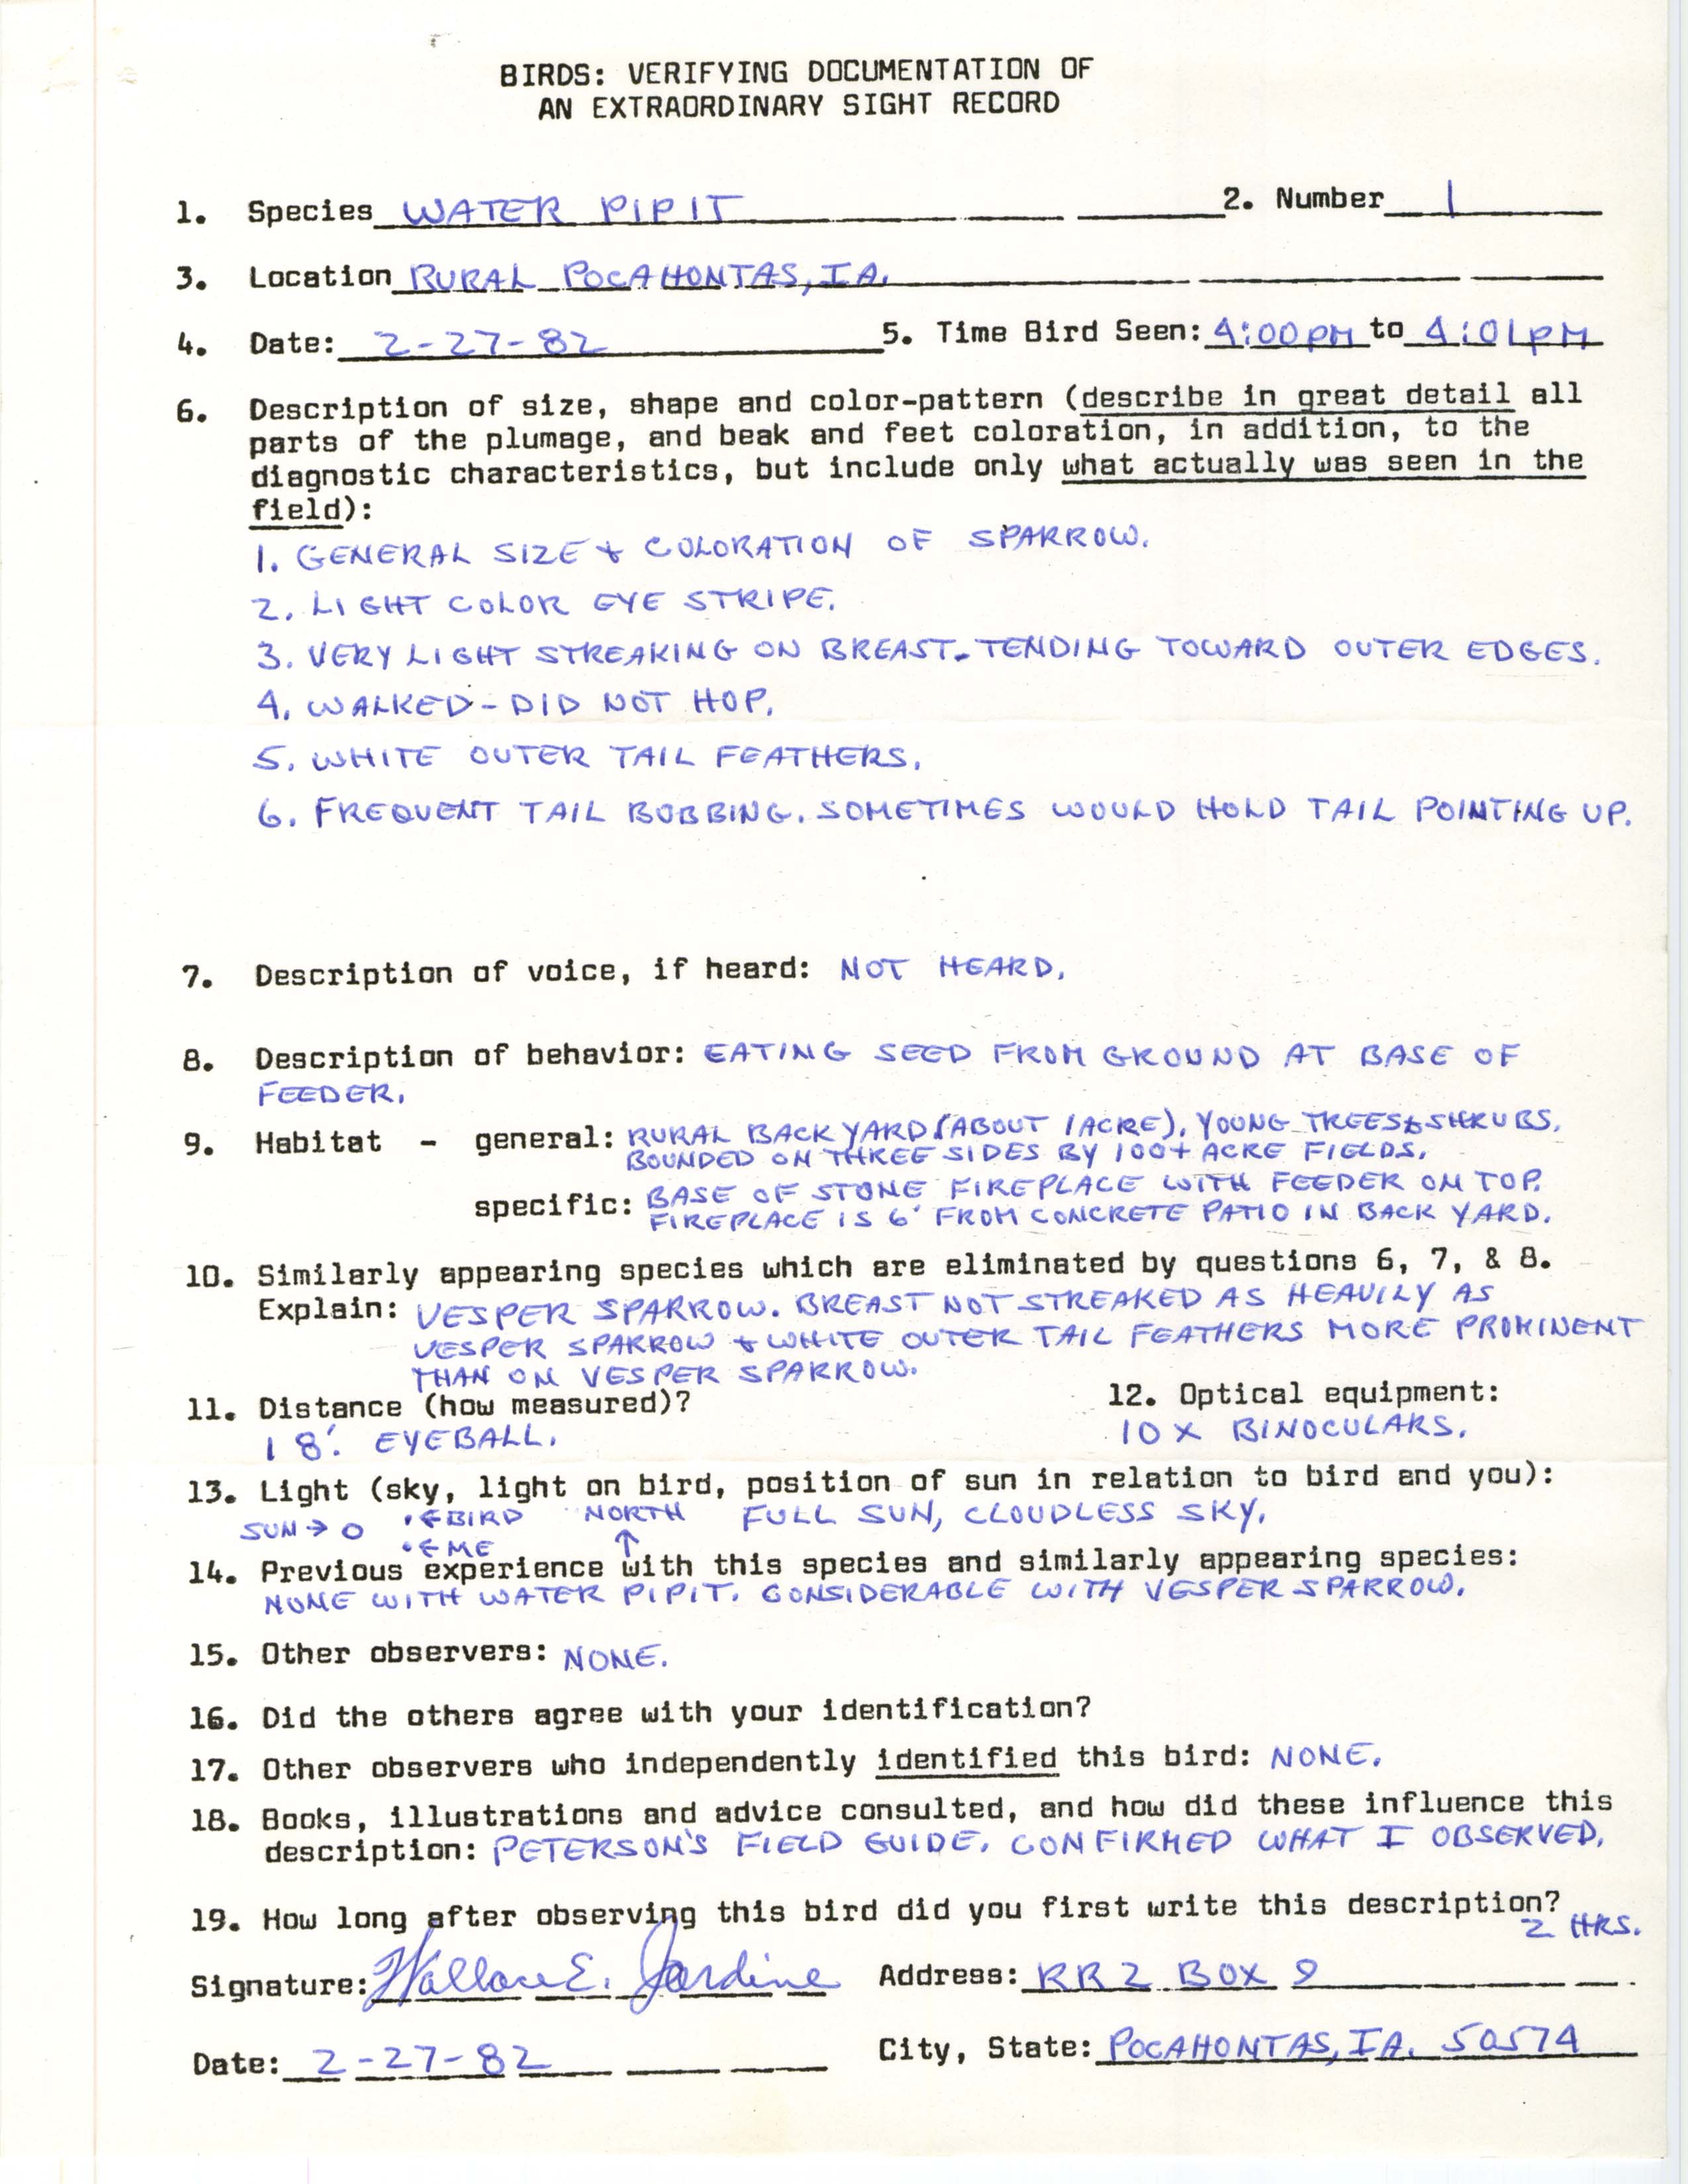 Rare bird documentation form for American Pipit at Pocahontas, 1982